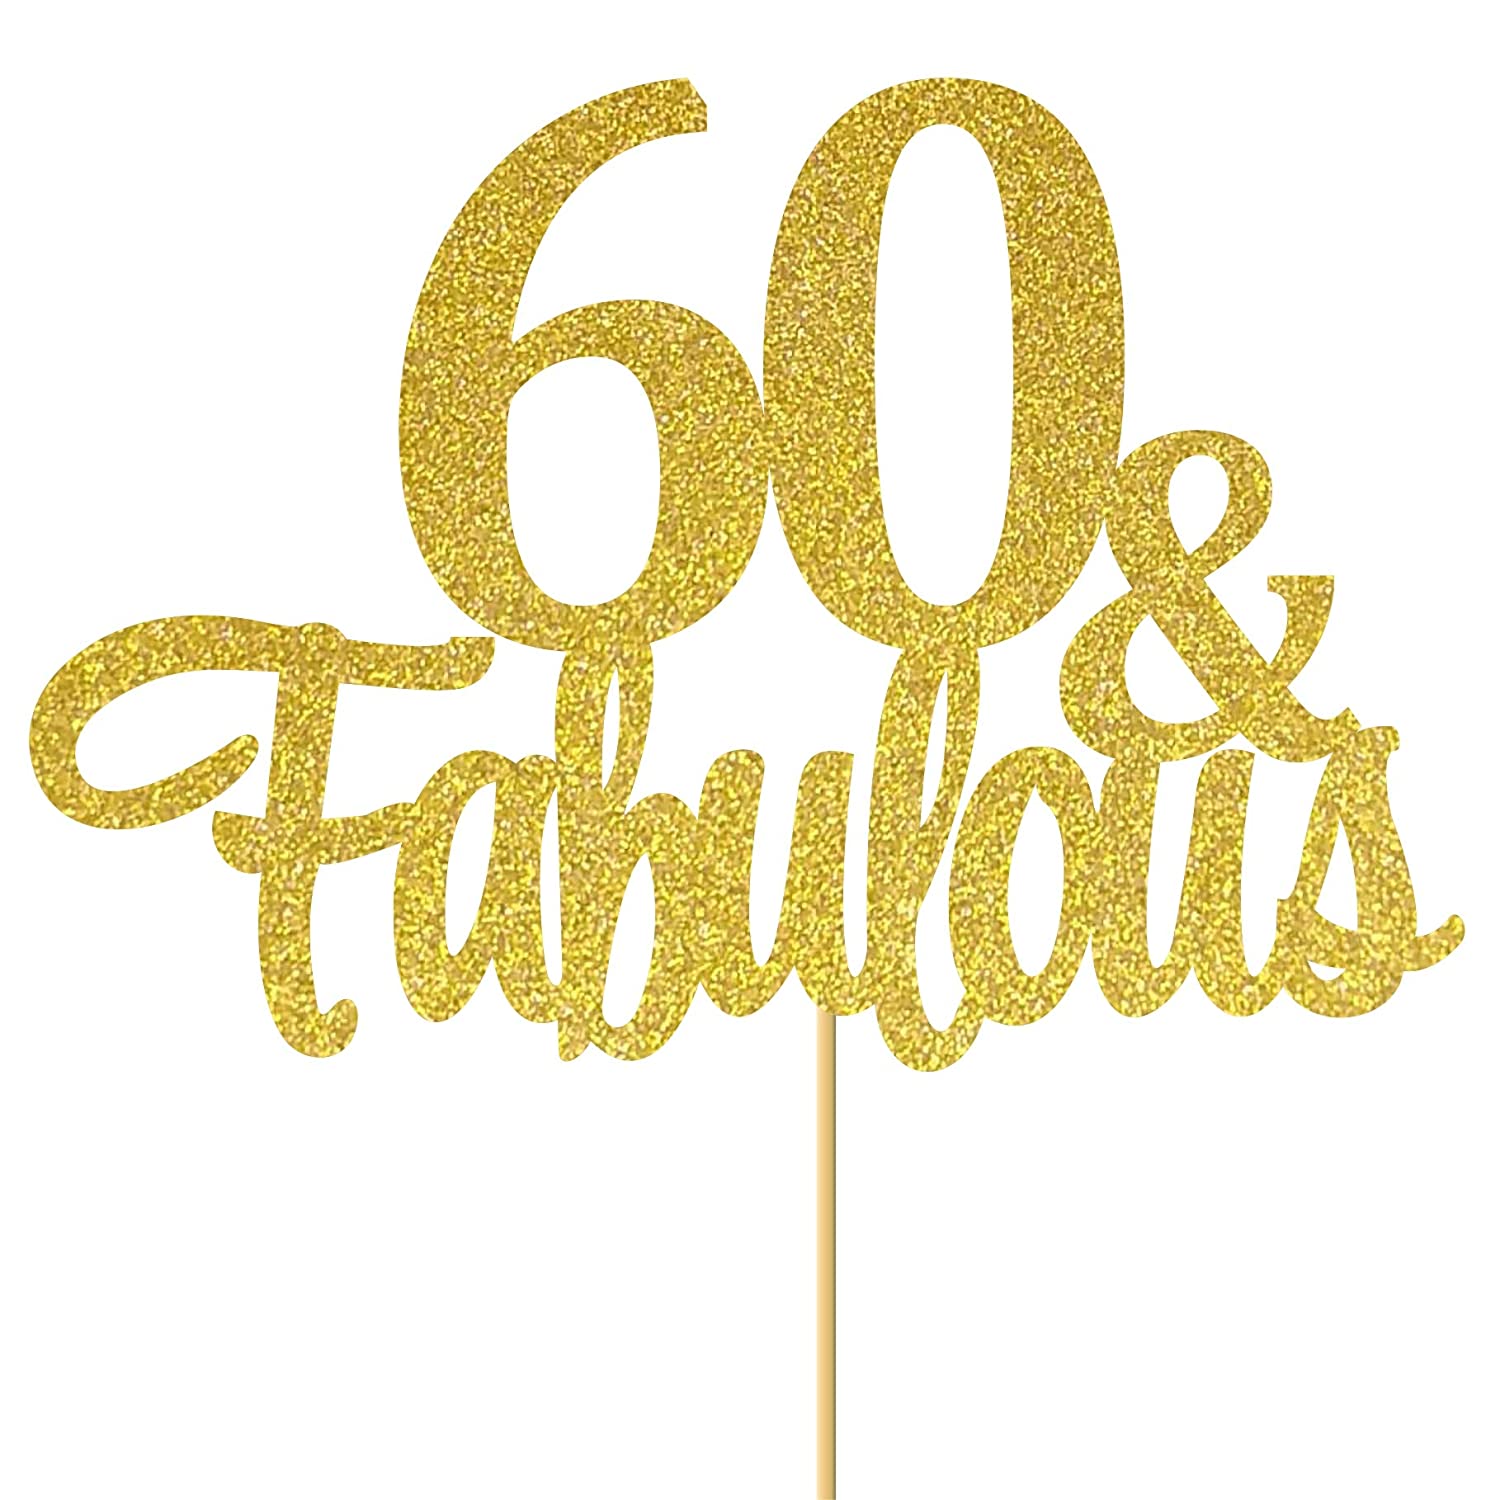 60th Anniversary Cake Topper Gold Glitter, 60 Wedding Anniversary